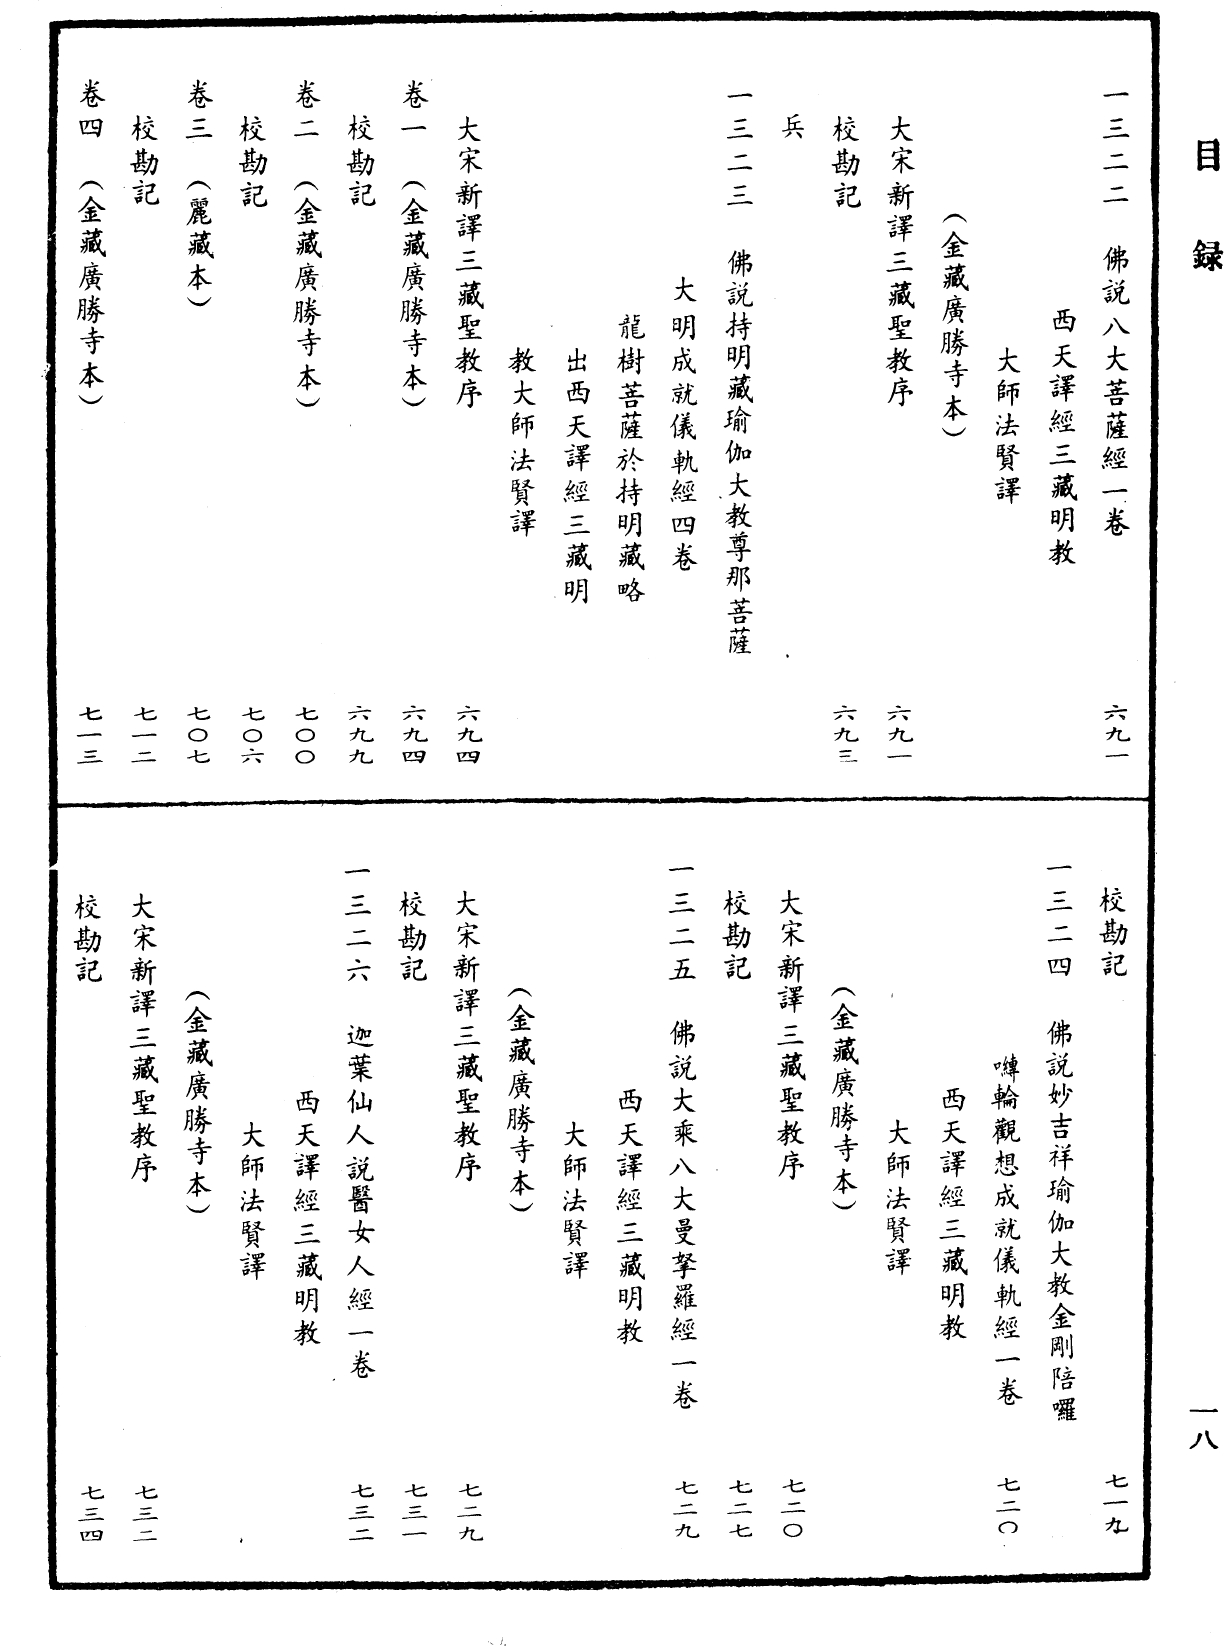 File:《中華大藏經》 第64冊 目録 (18).png